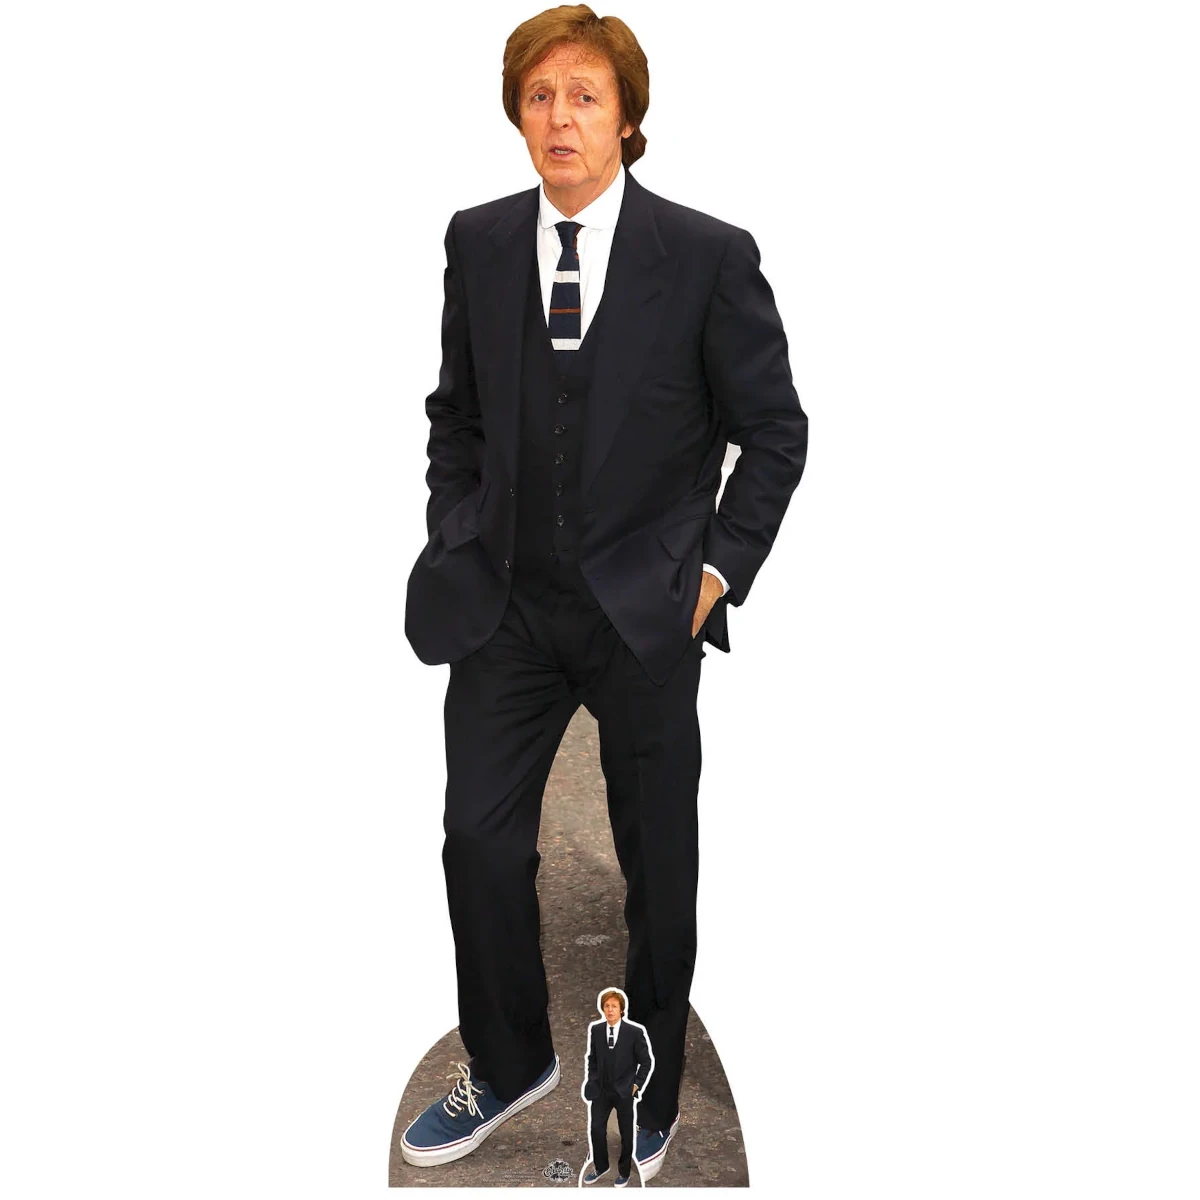 CS802 Sir Paul McCartney (English SingerSongwriter) Lifesize + Mini Cardboard Cutout Standee Front